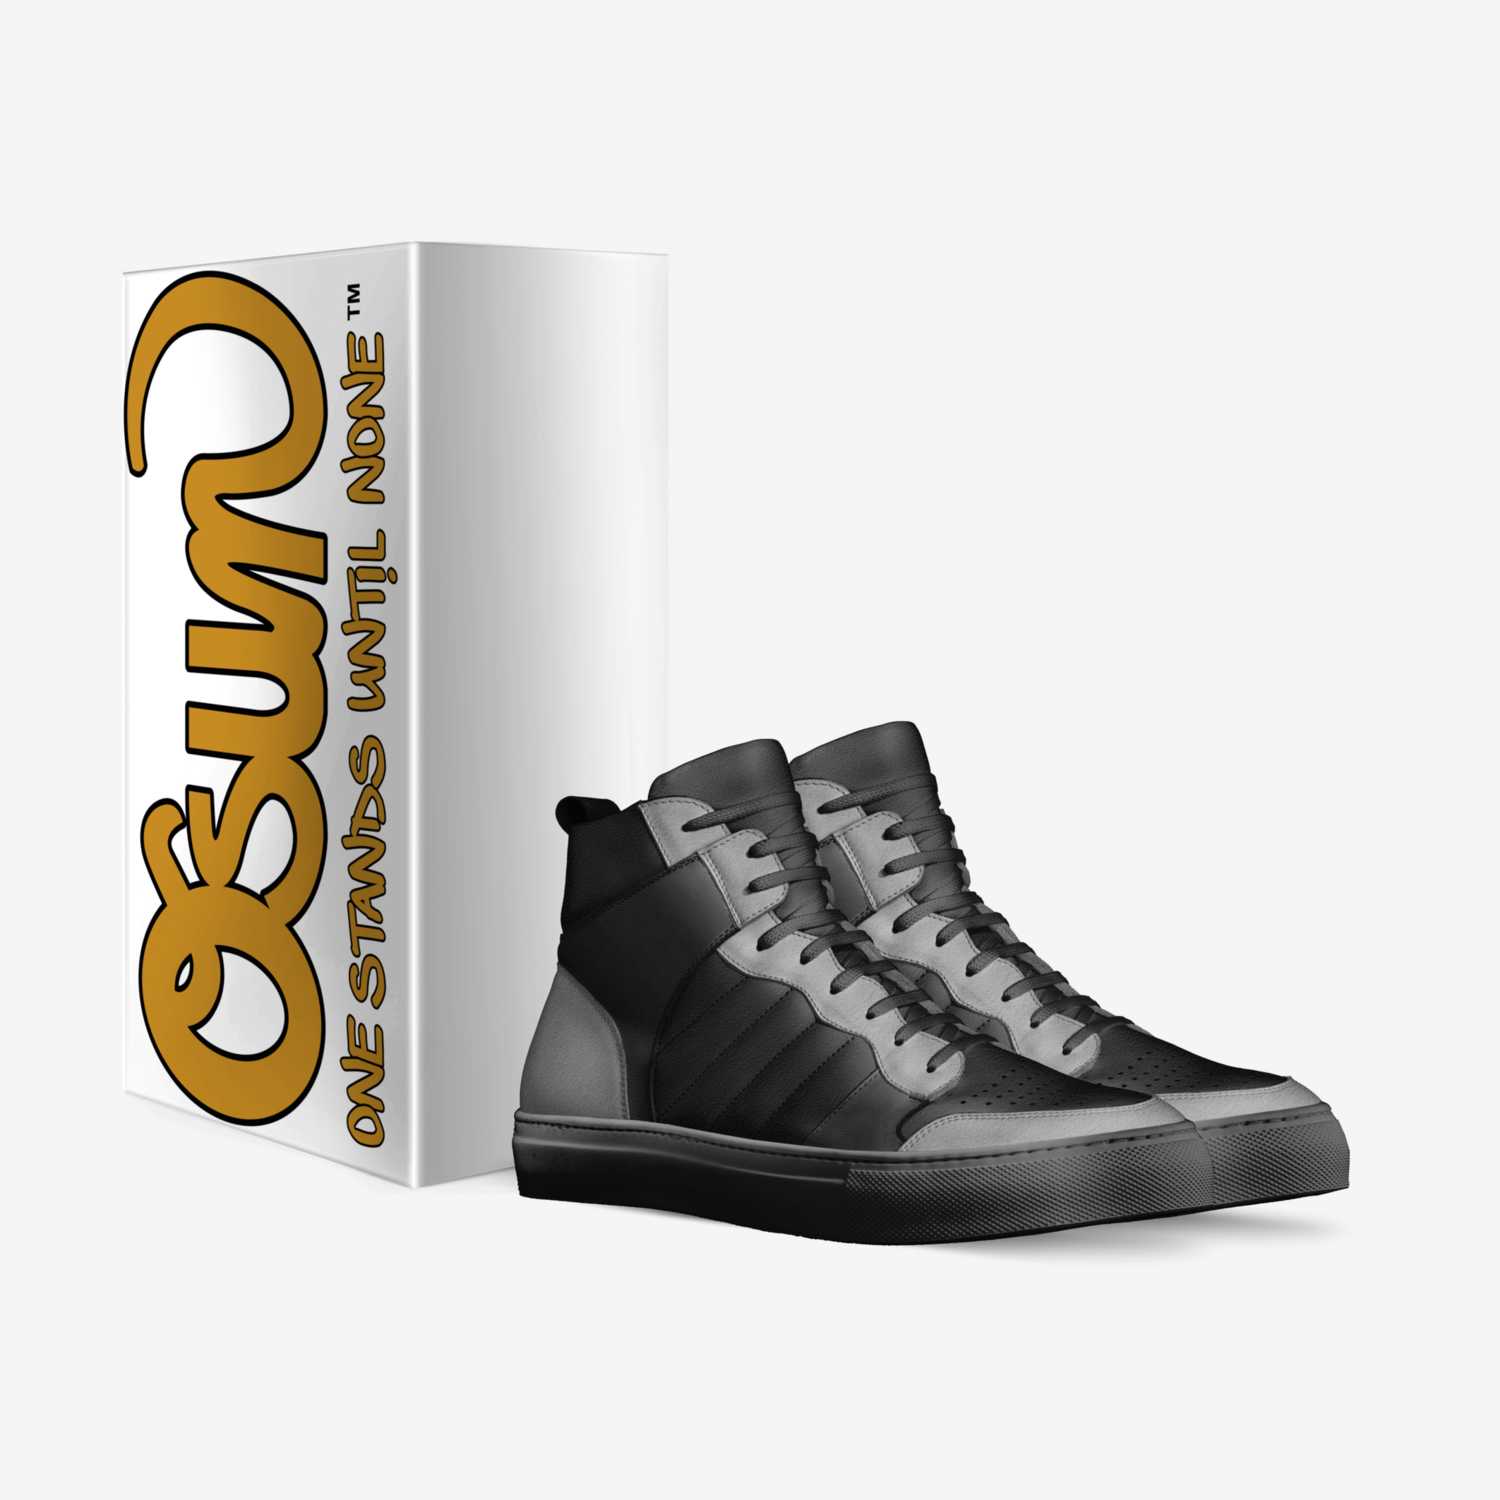 CornballFresh custom made in Italy shoes by Leonty Danzie | Box view